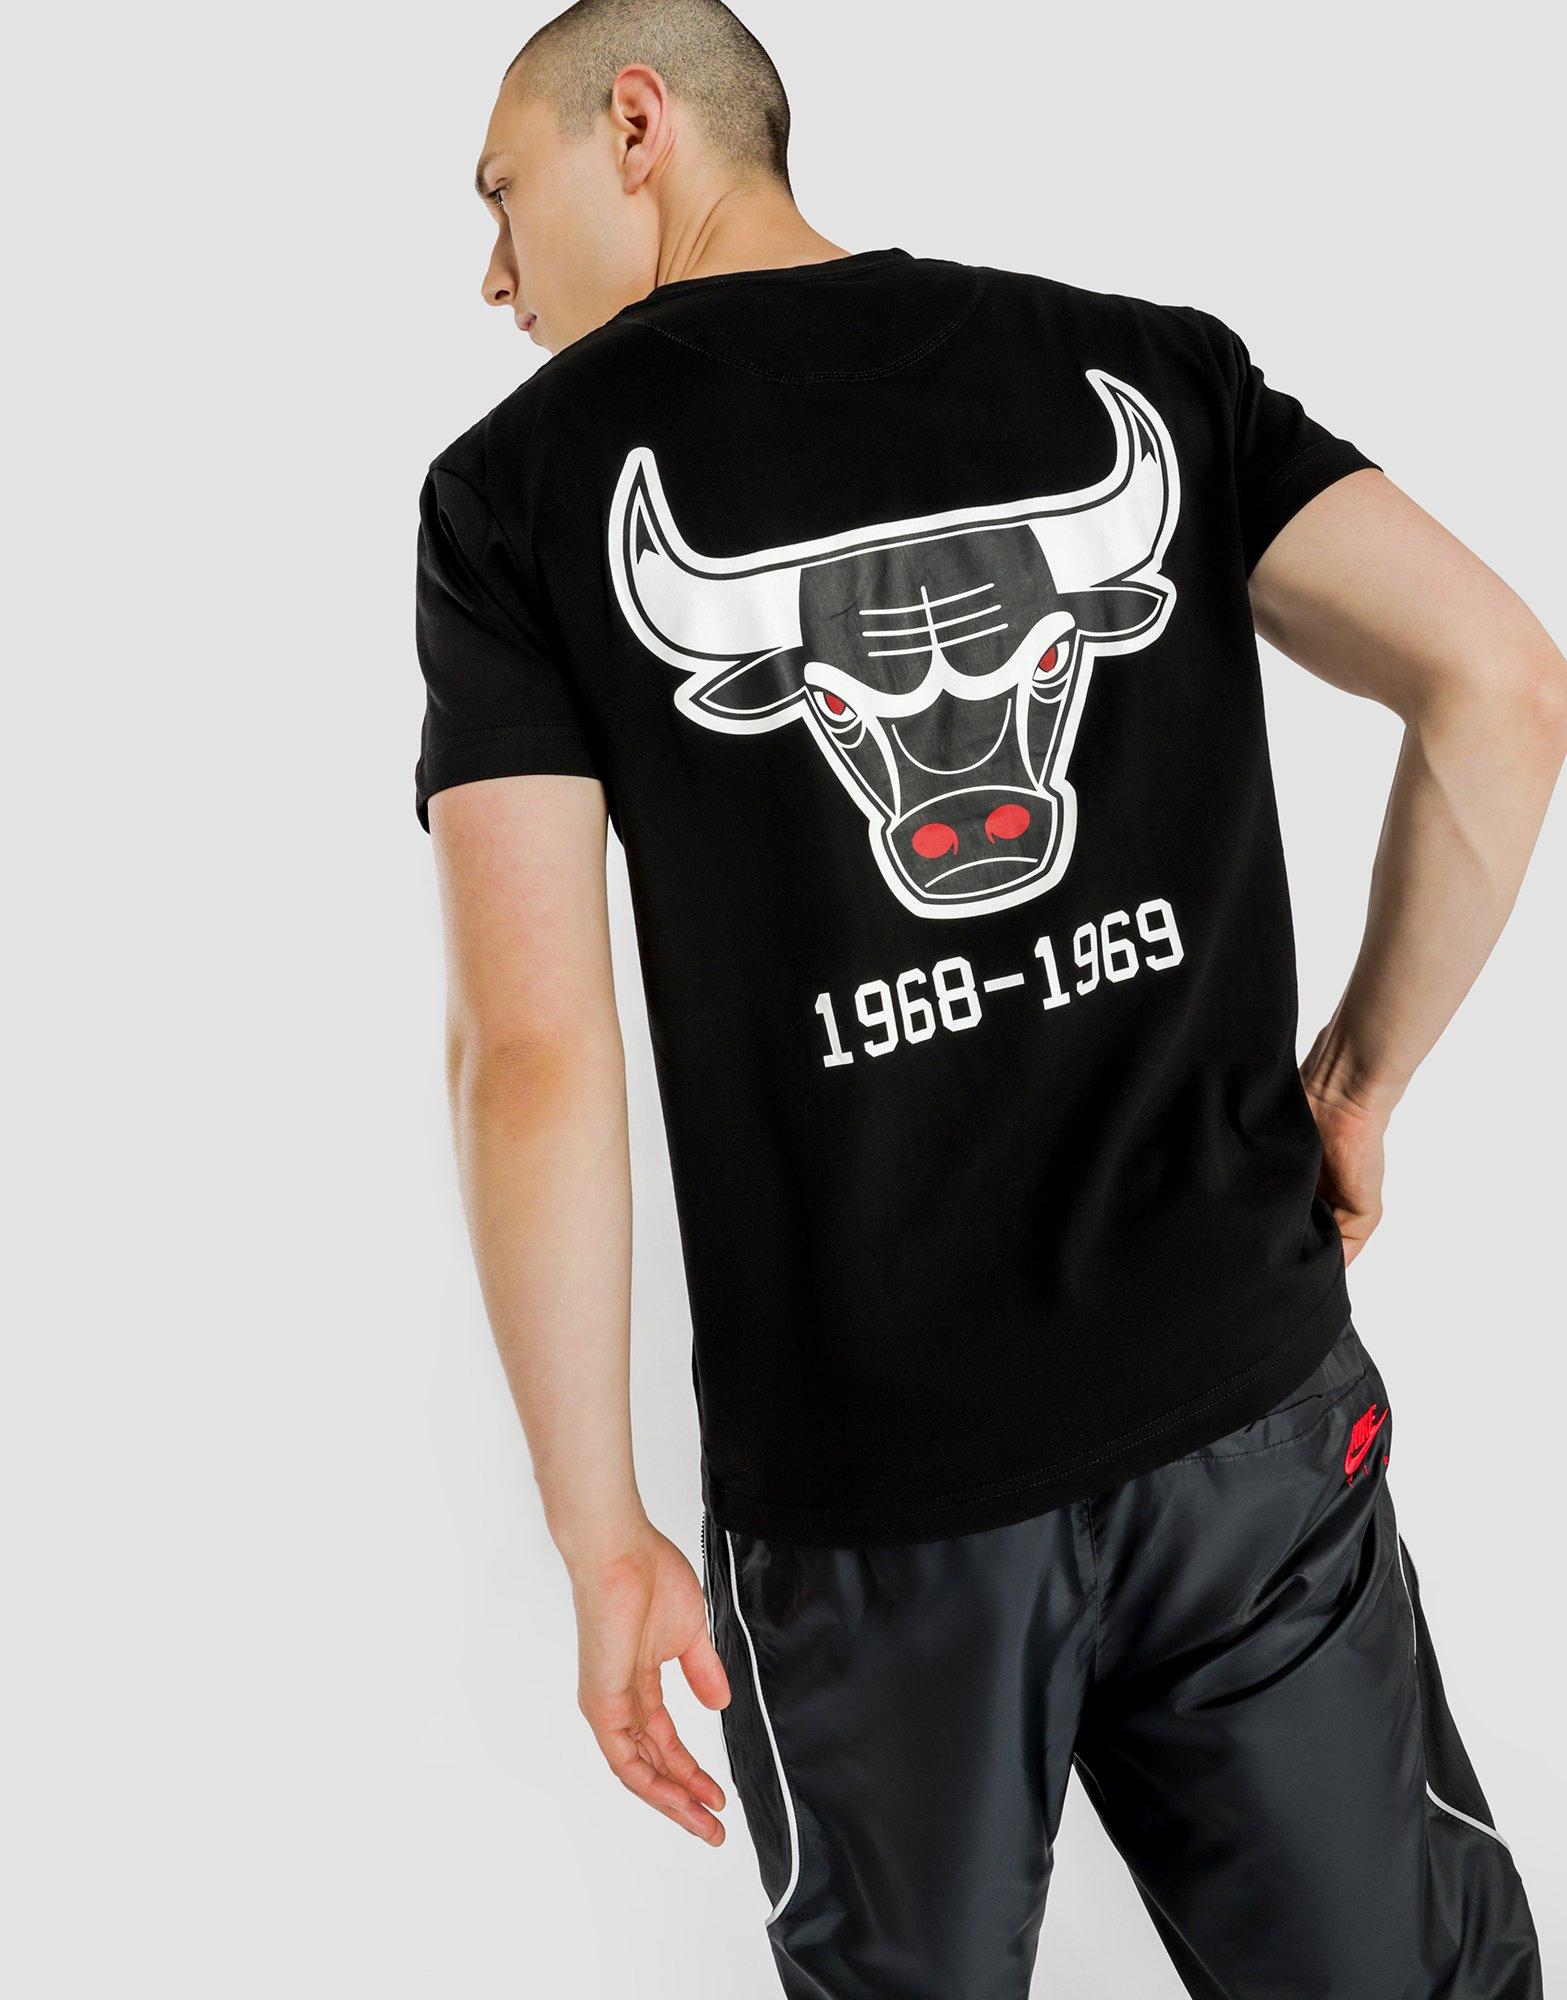 retro chicago bulls shirt